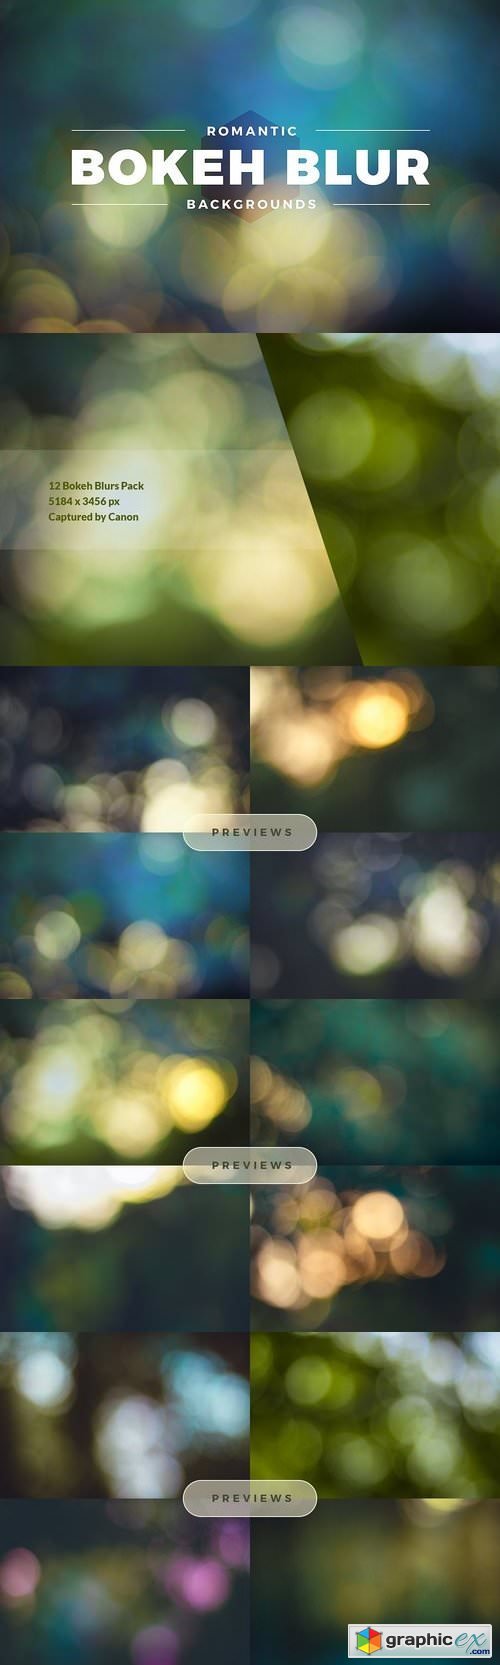 Romantic Bokeh Blur Backgrounds Pack